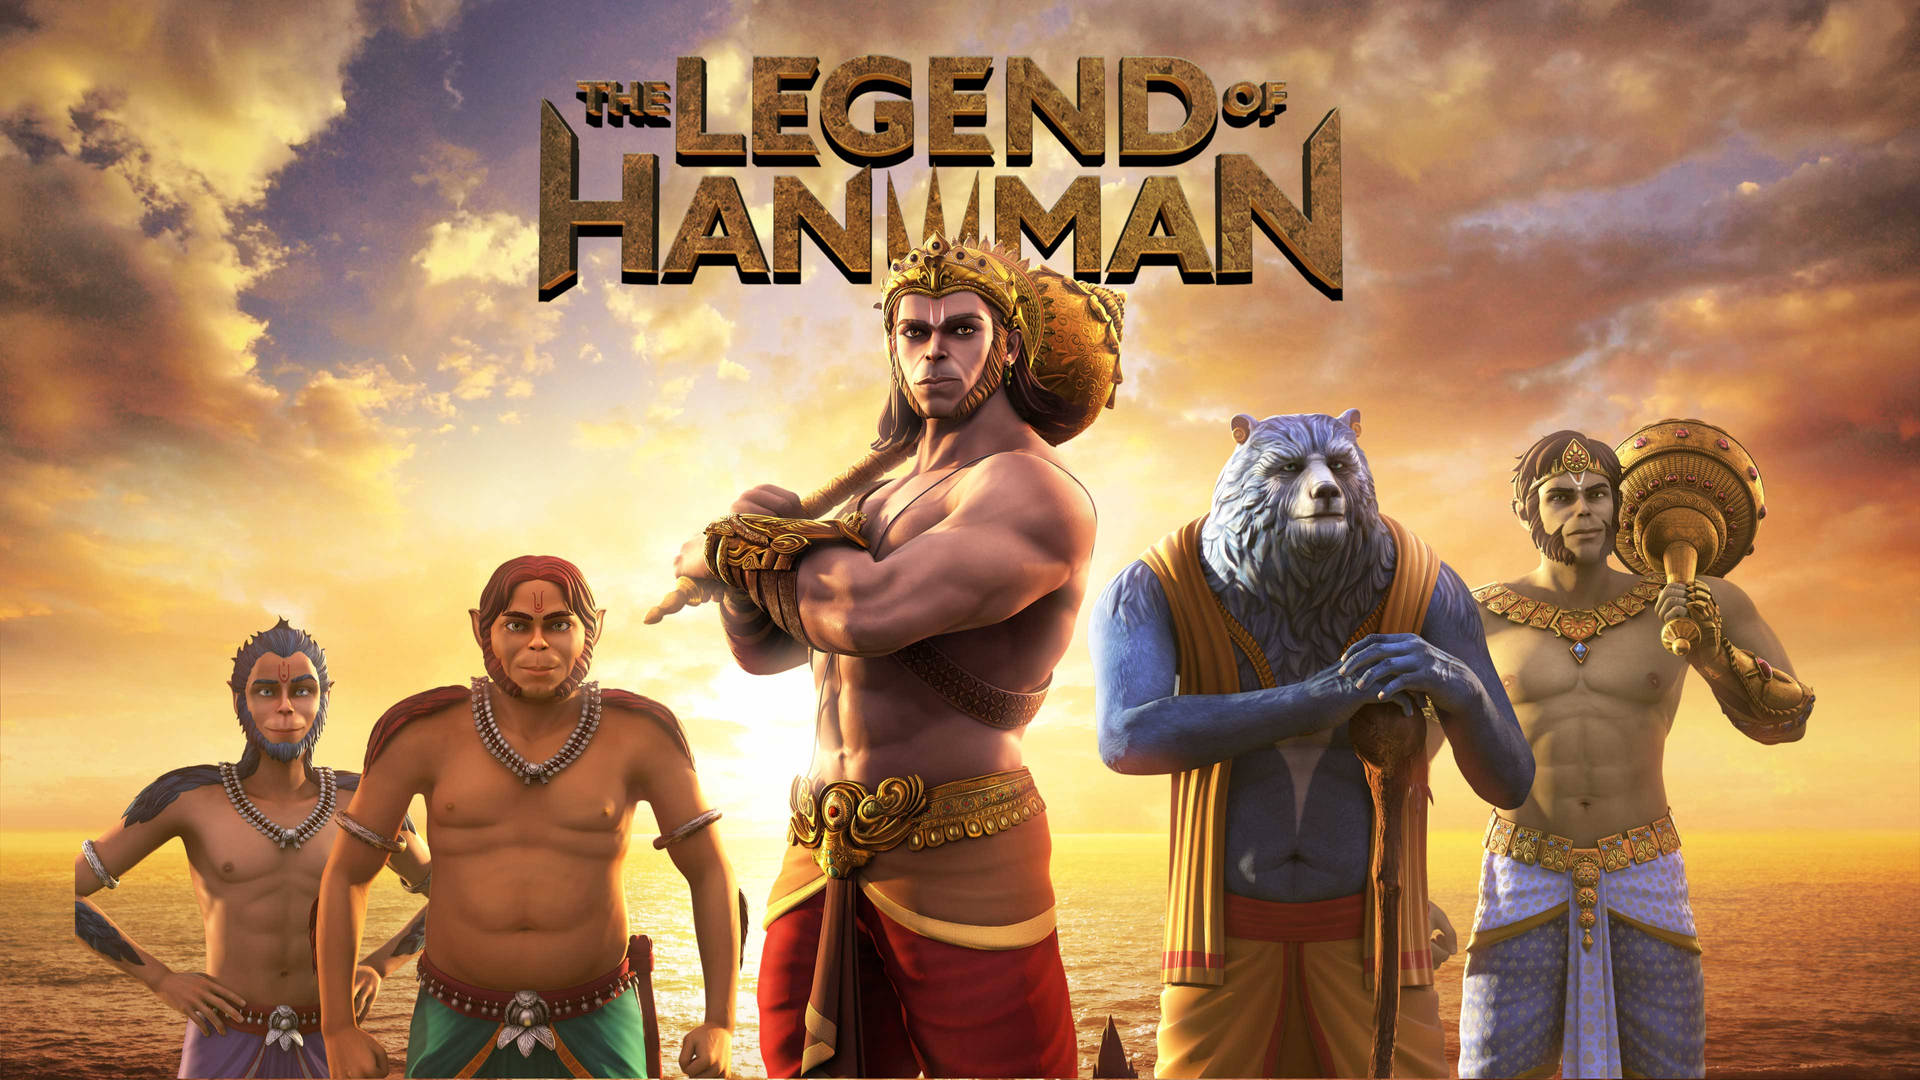 Free Hanuman 4k HD Wallpaper Downloads, Hanuman 4k HD Wallpaper for FREE